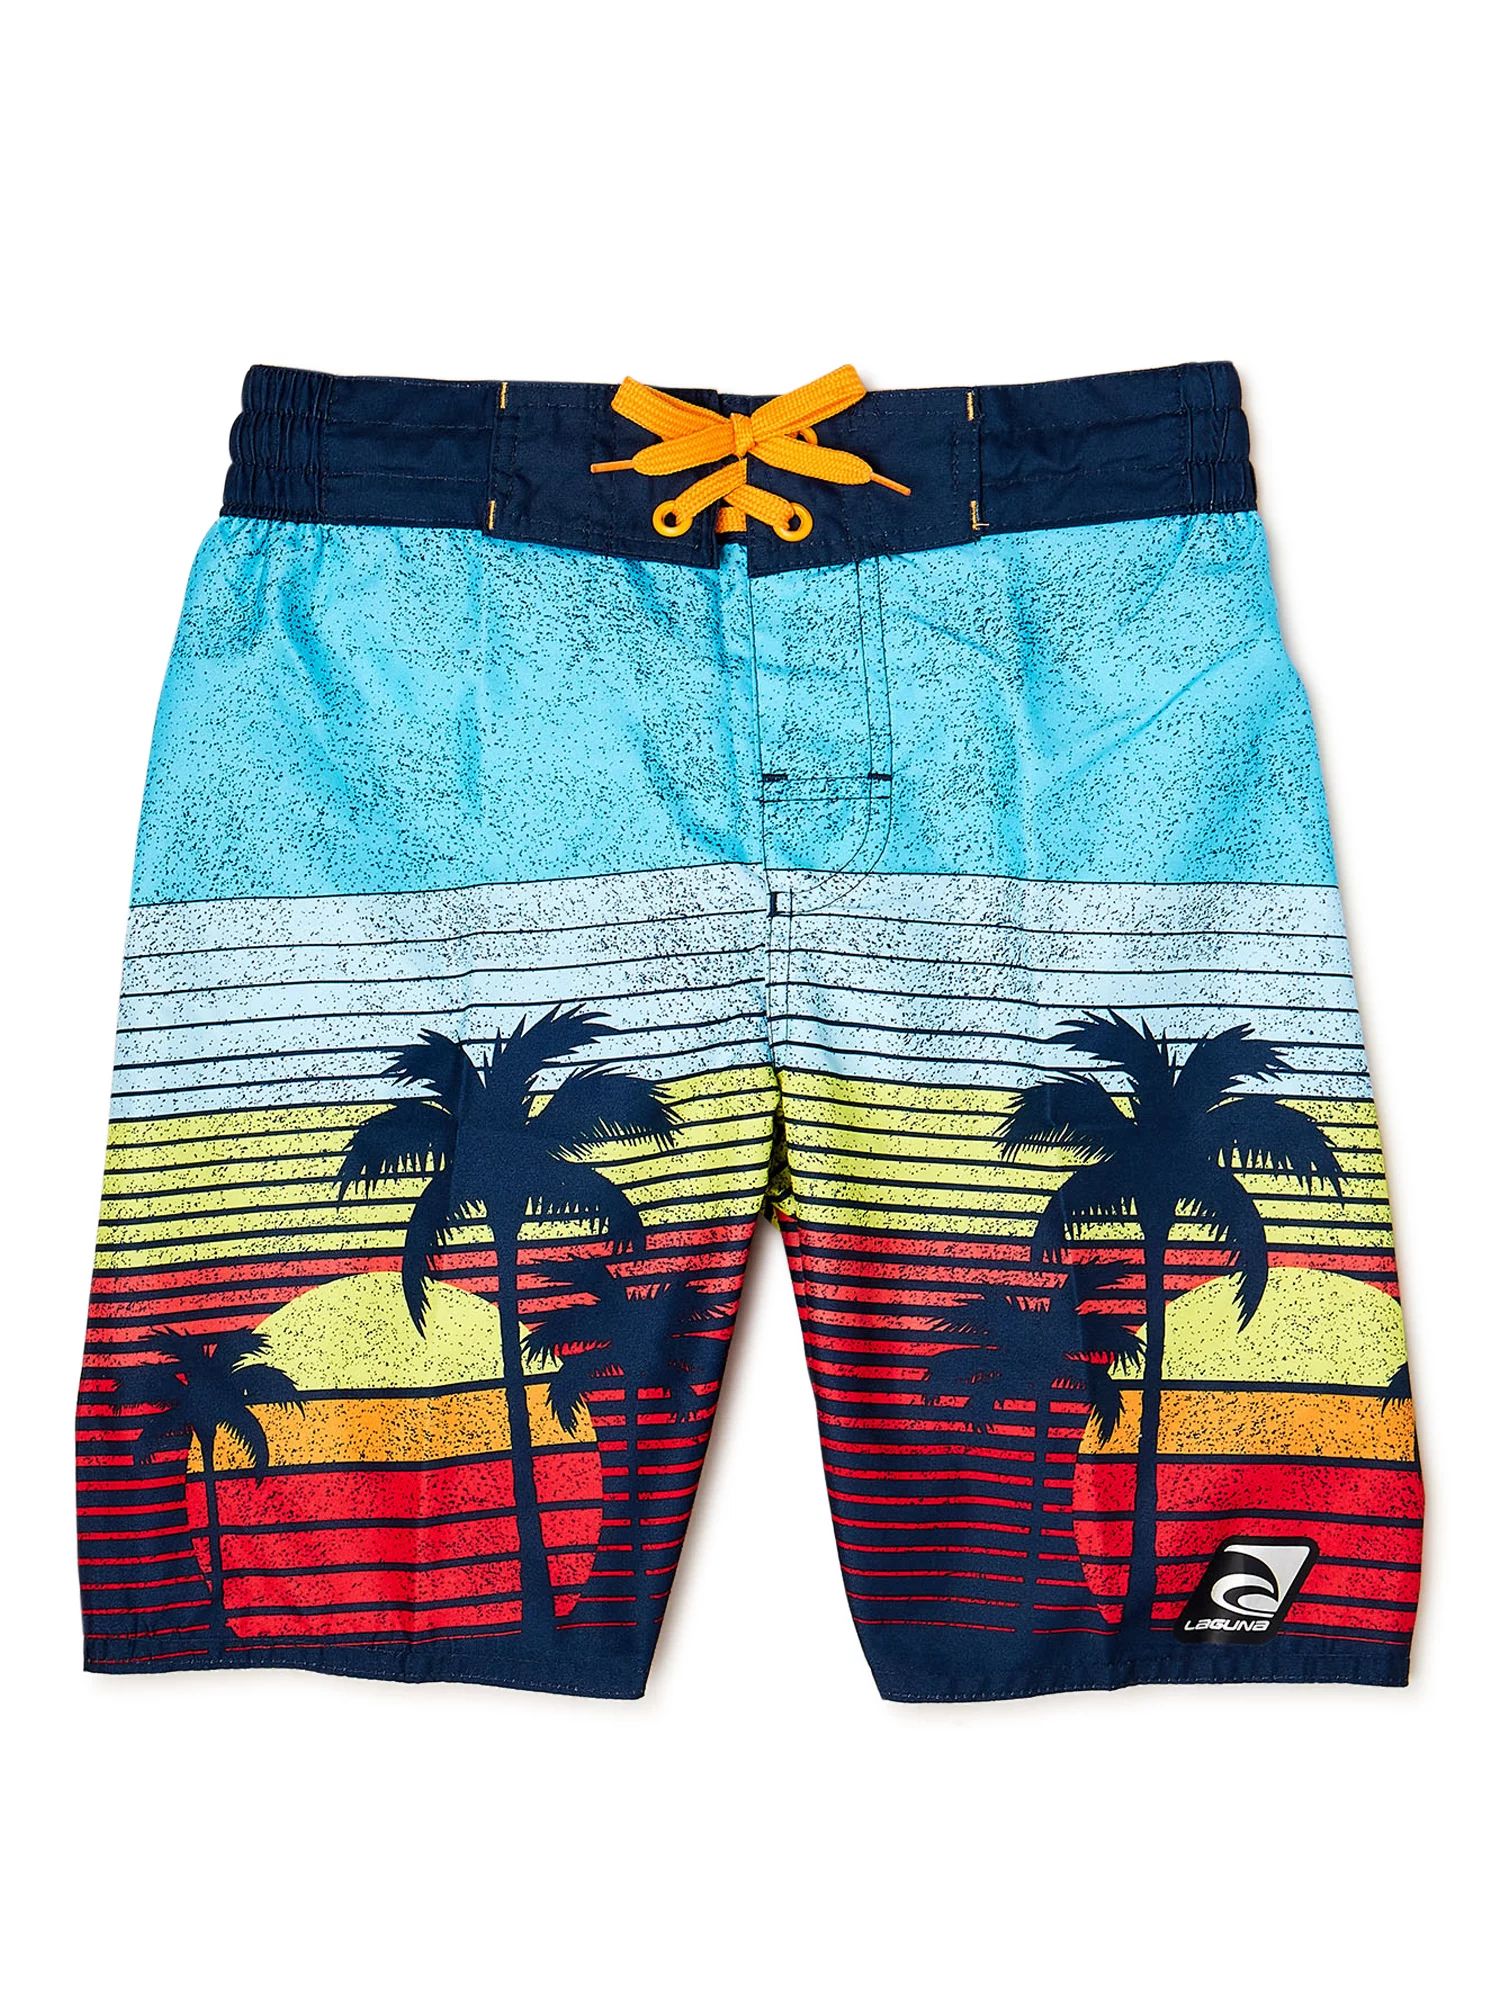 Laguna Boys Endless Summer Swim Trunks with UPF 50, Sizes 8-16 | Walmart (US)